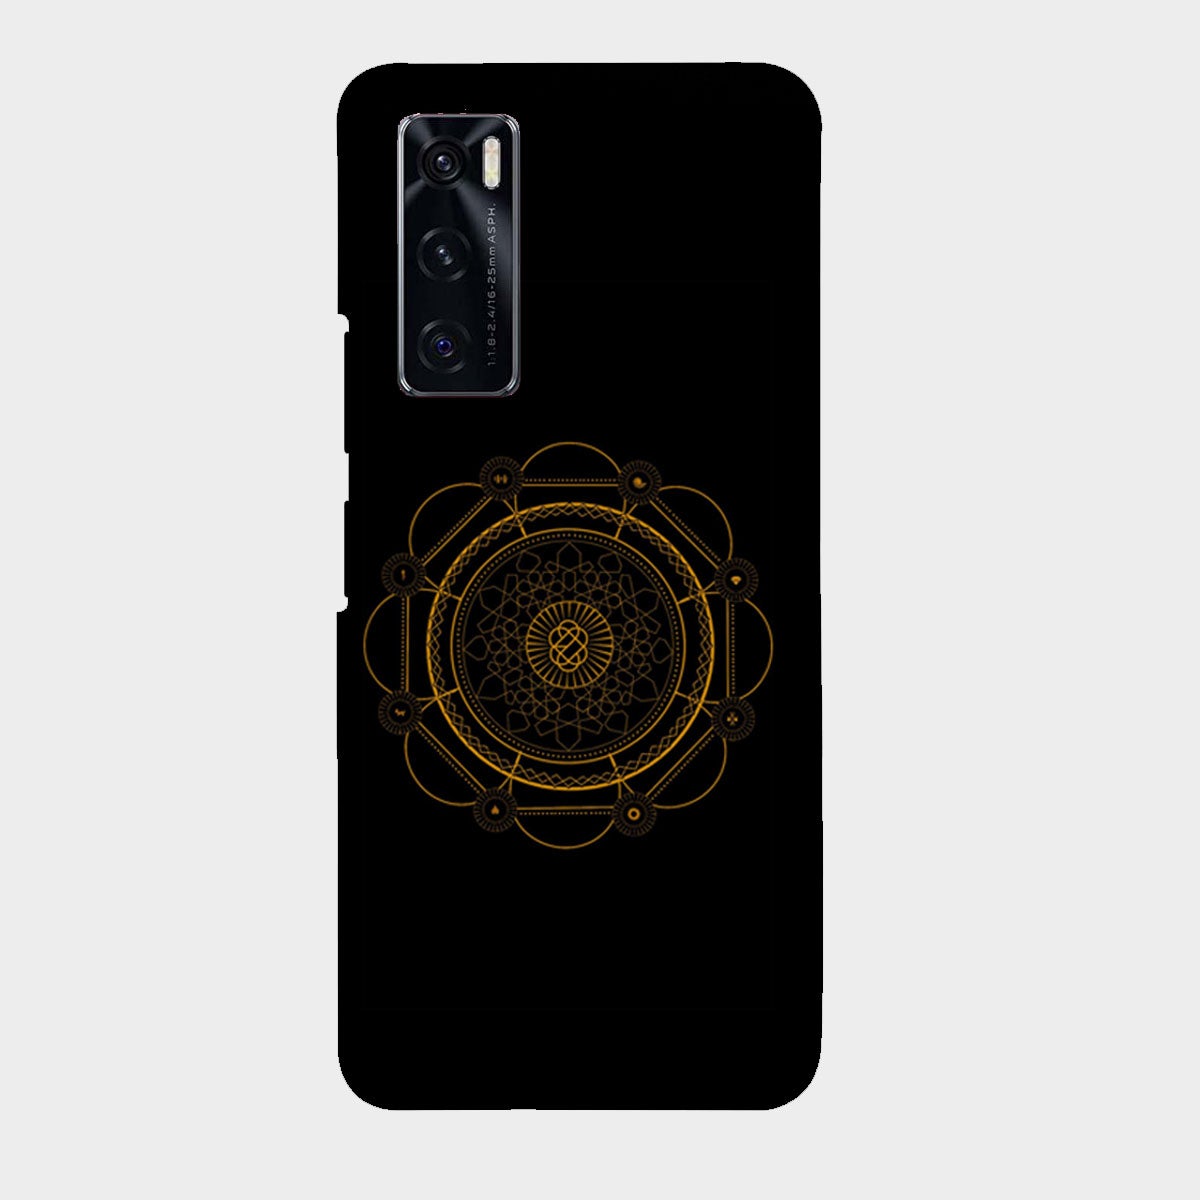 Sacred Games - Mobile Phone Cover - Hard Case - Vivo